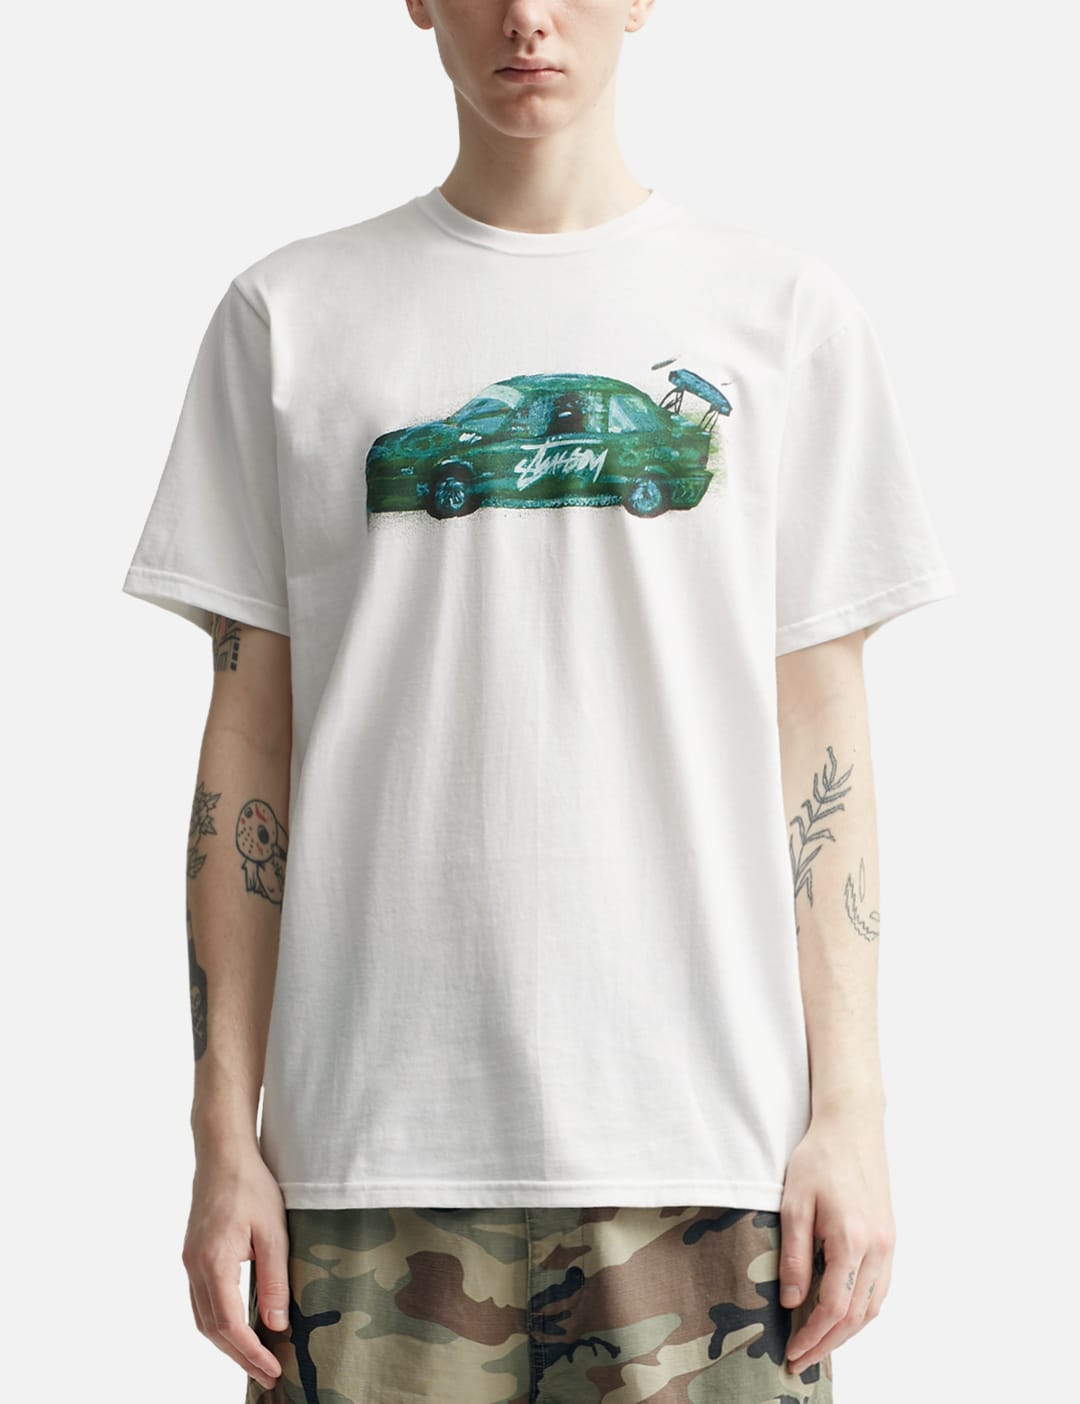 Stüssy - Race Car T-shirt | HBX - HYPEBEAST 為您搜羅全球潮流時尚品牌